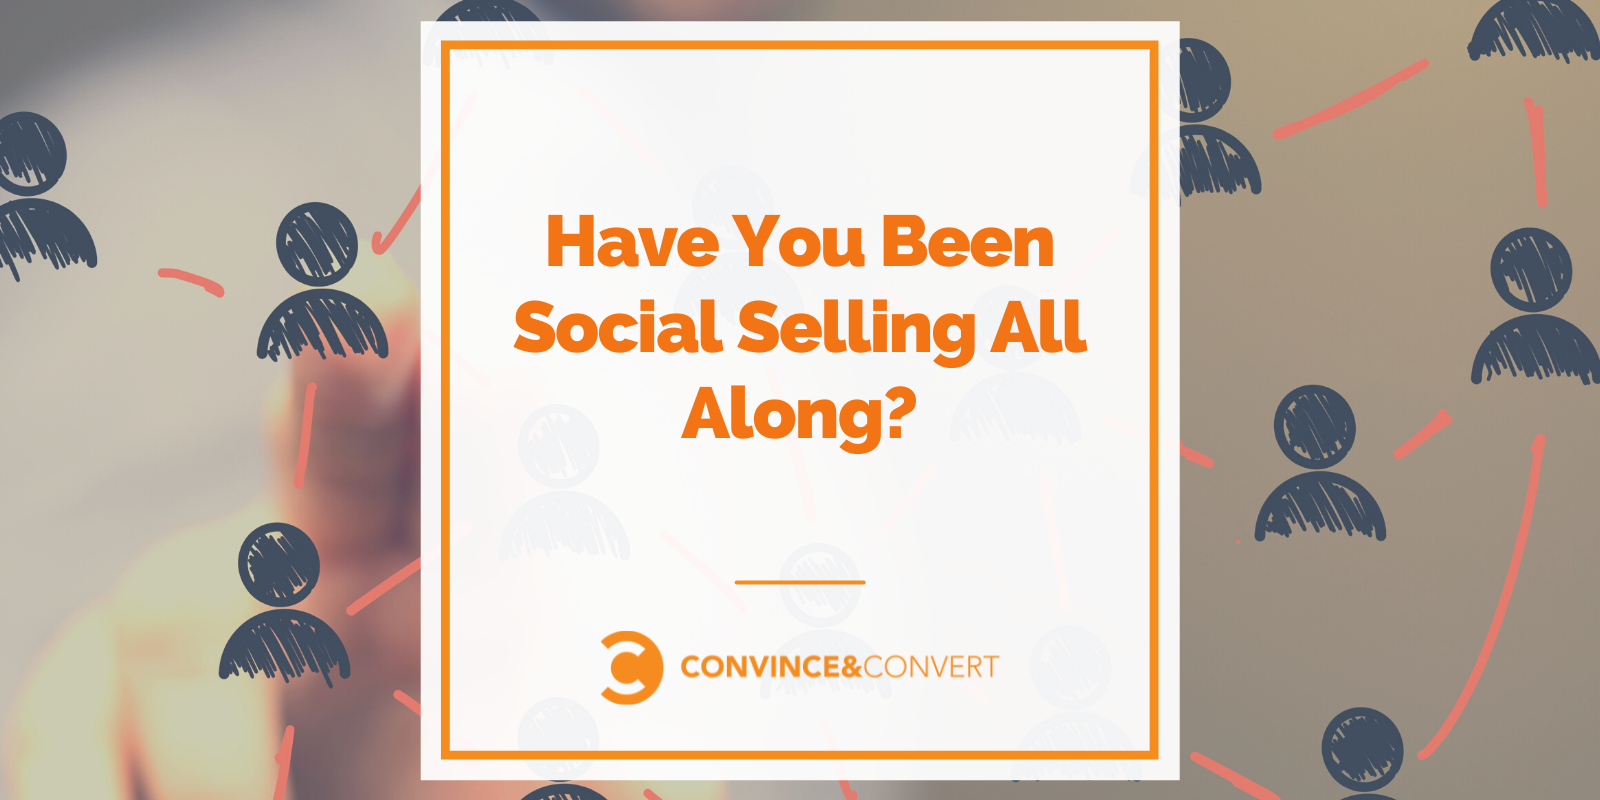 Hai sempre venduto sui social?